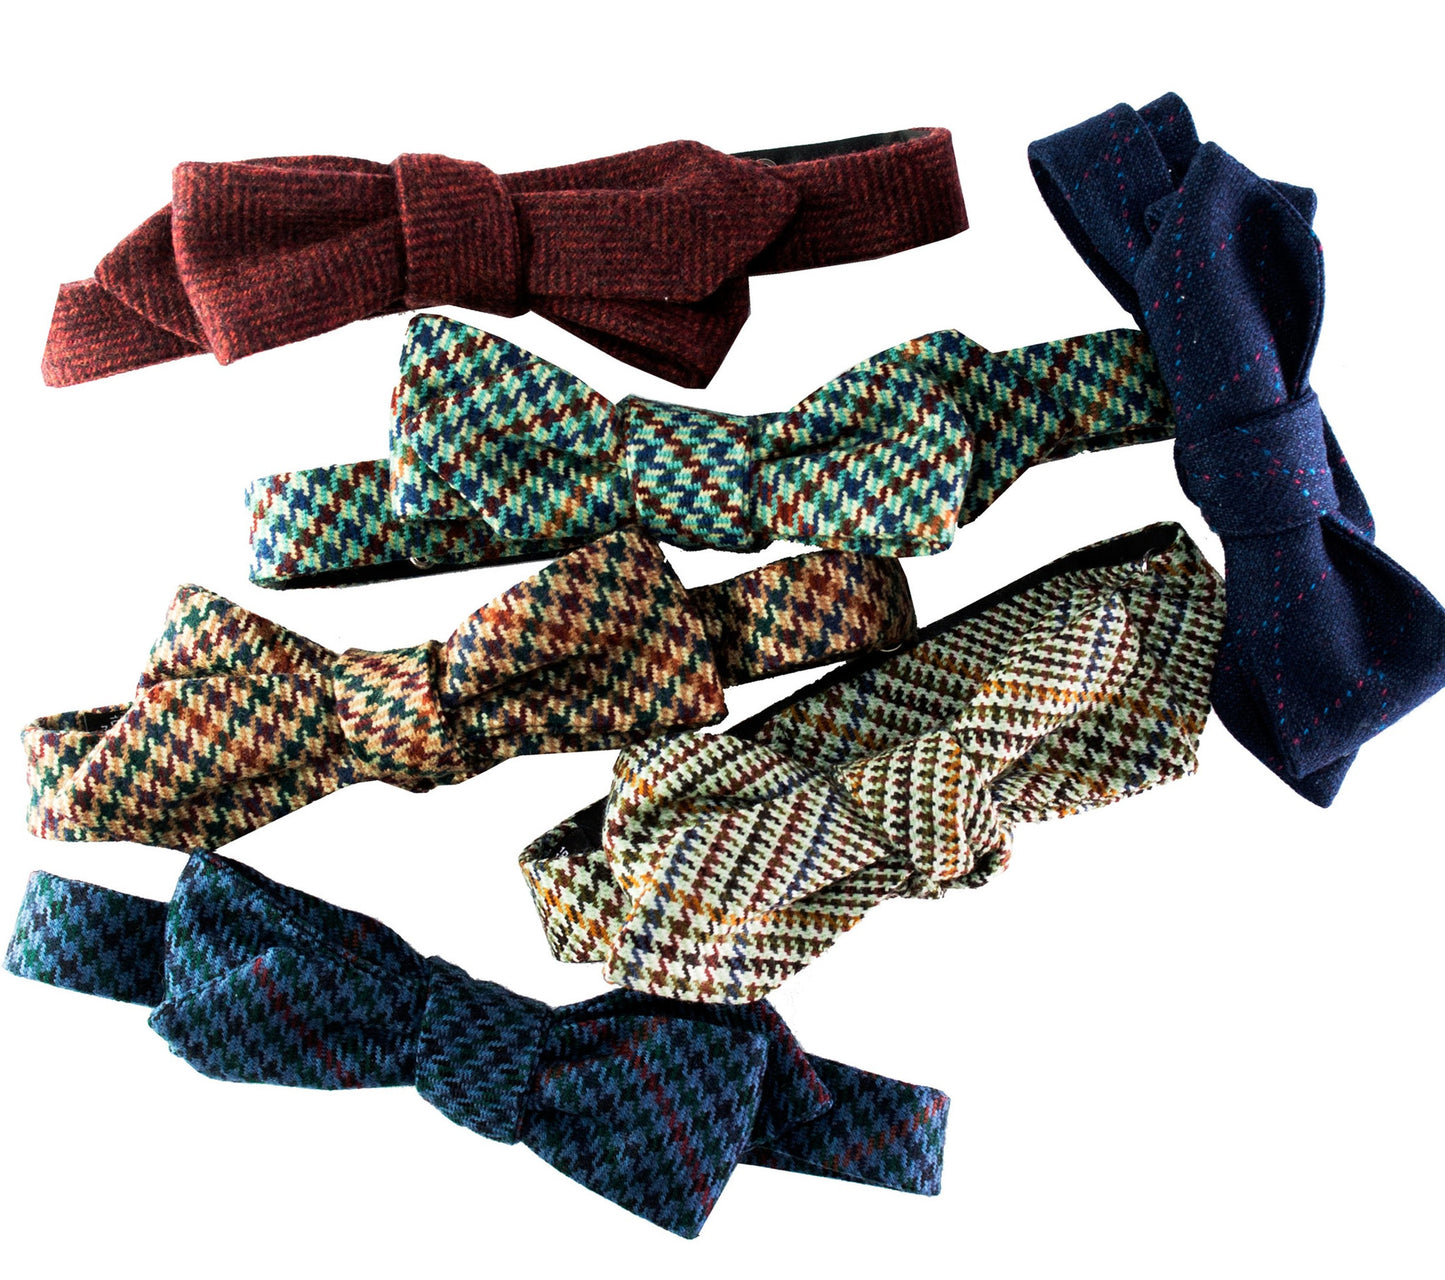 Bow Tie III - Margo Petitti Italy - scarf 